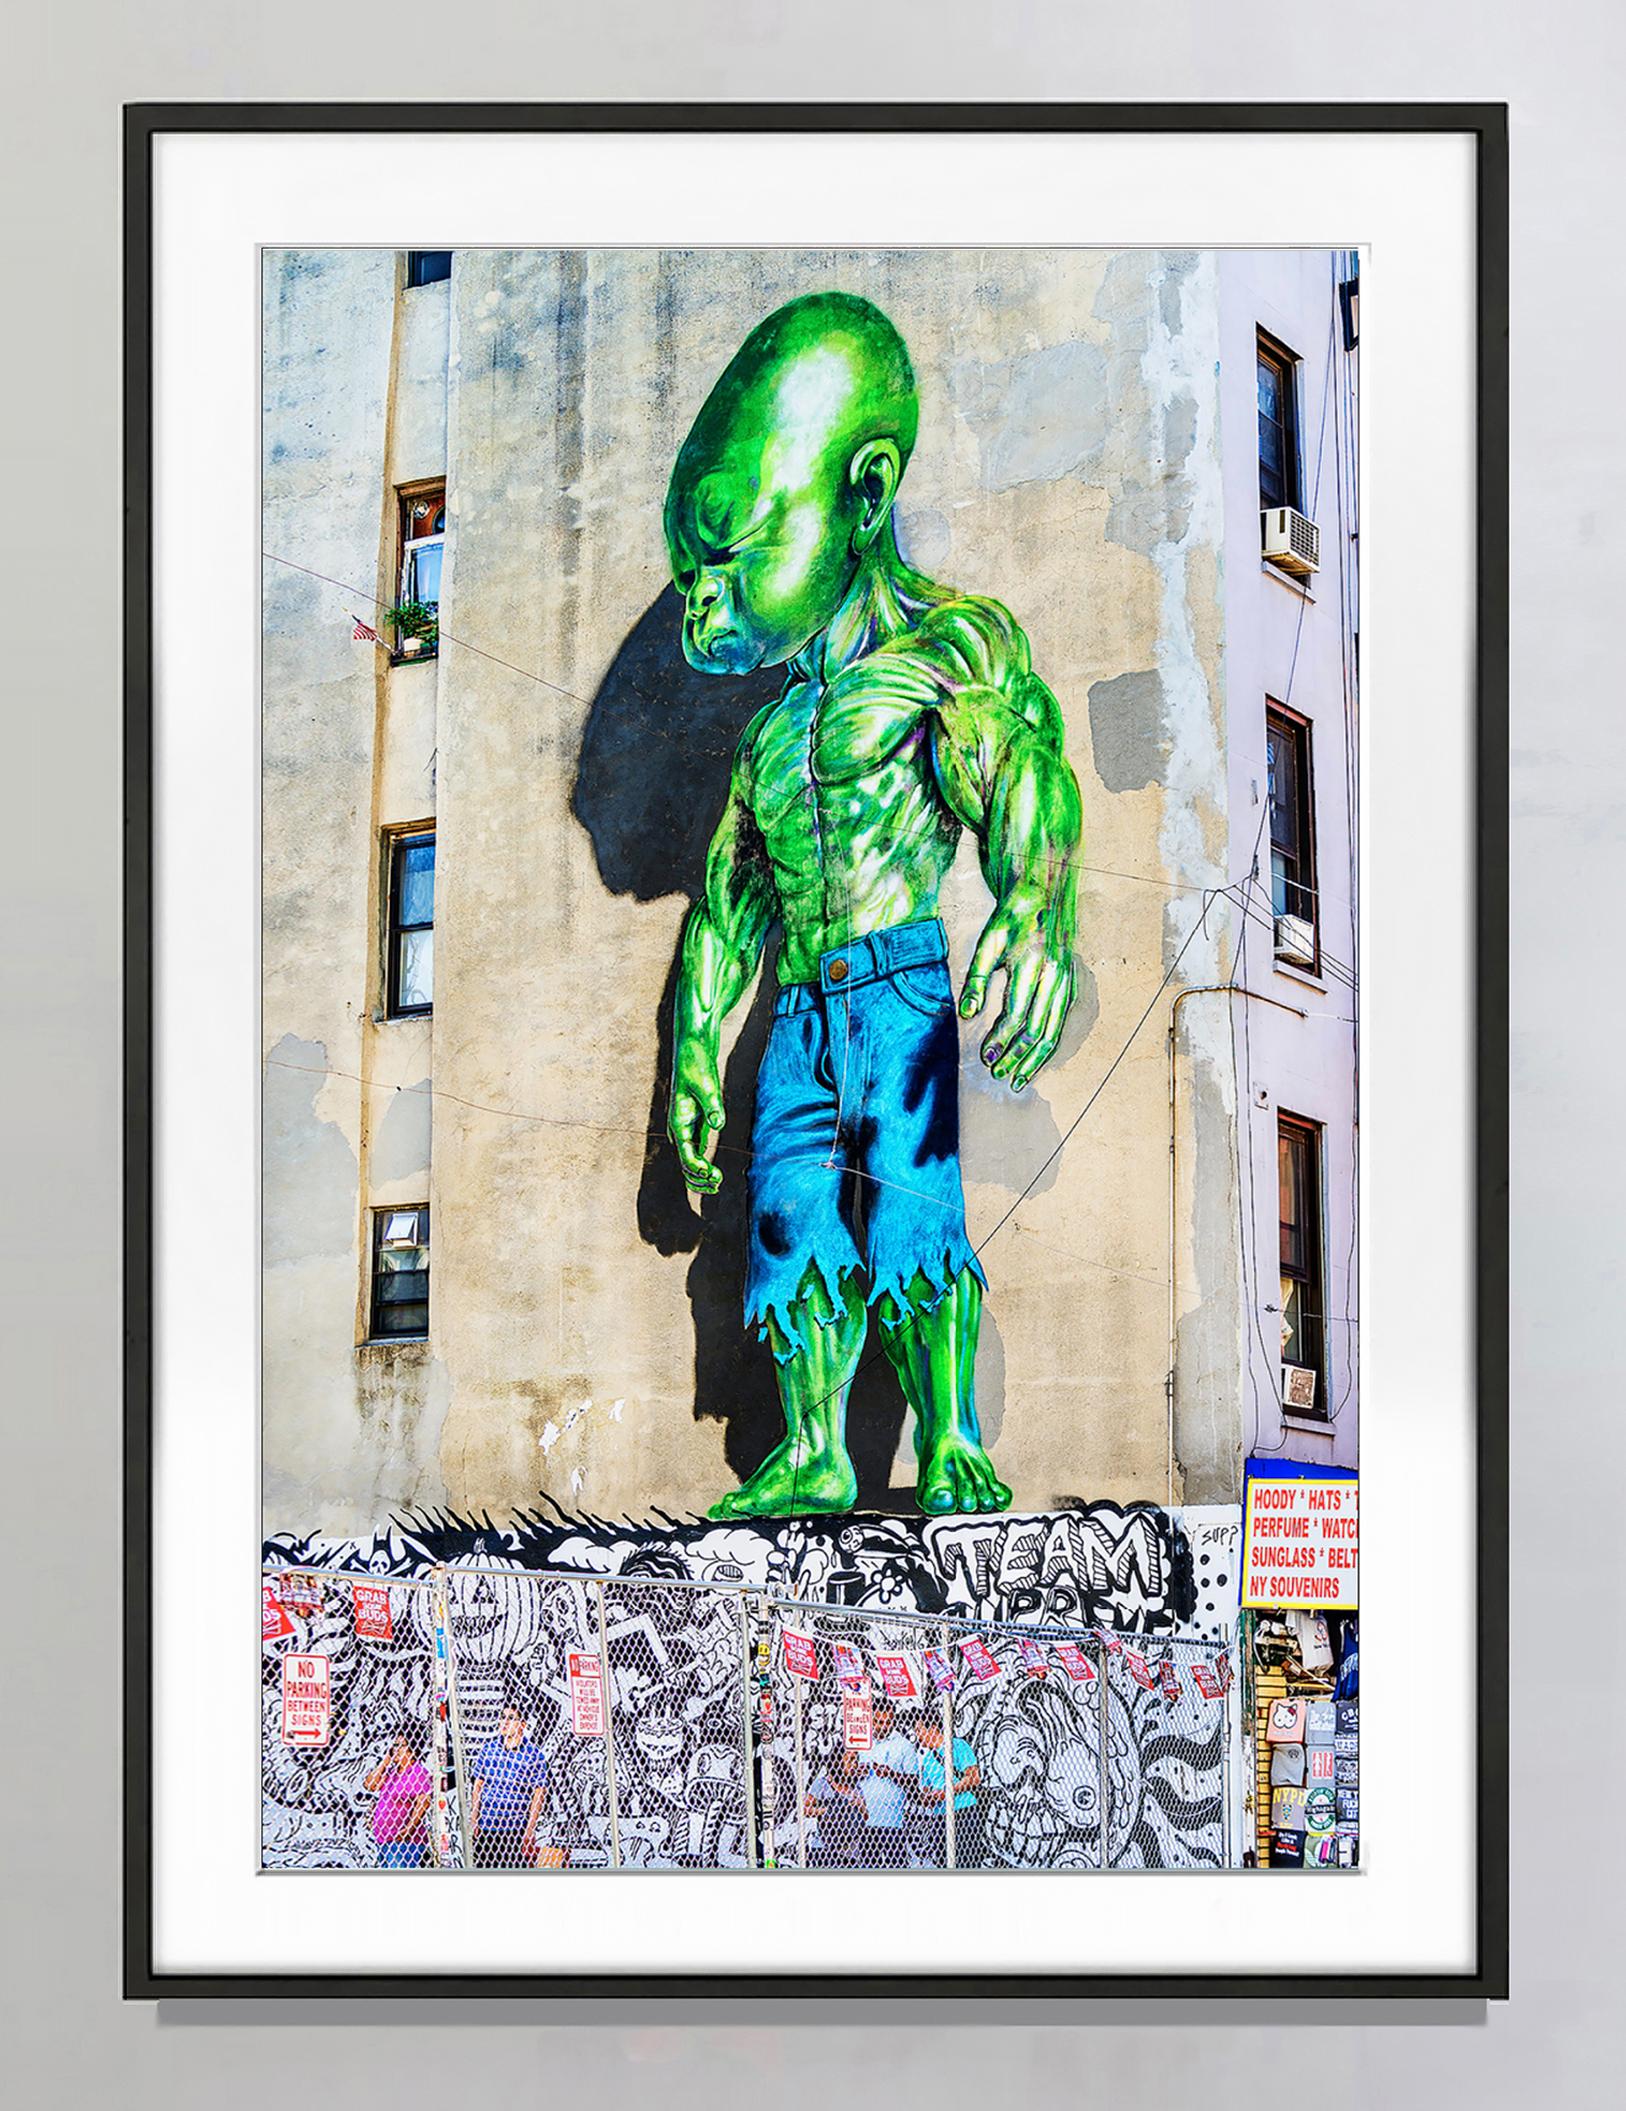 Graffiti Wall with Little Green Man  - Urban Art Sci- fi - Photograph by Mitchell Funk